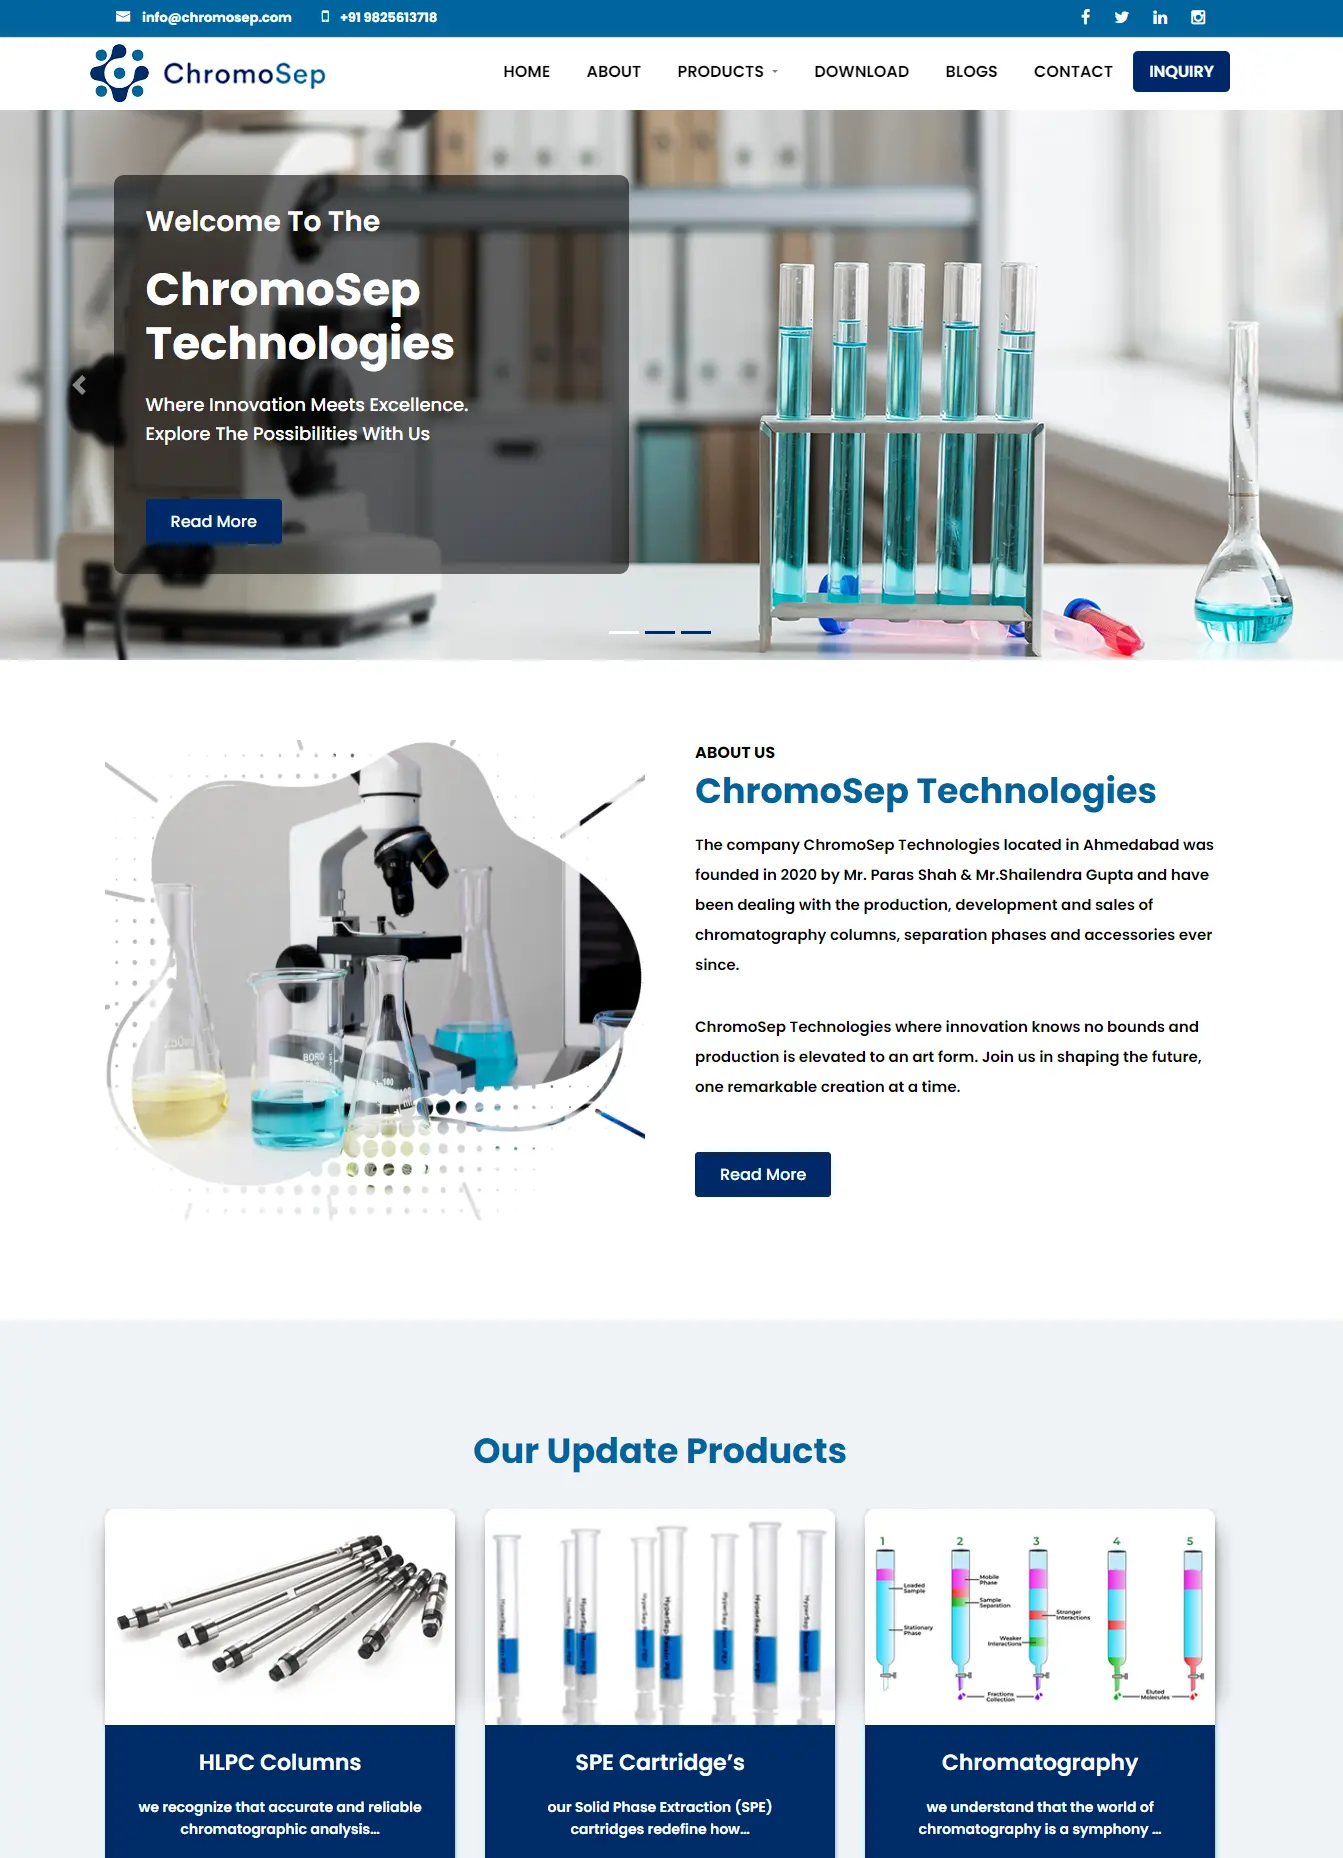 ChromoSep Technologies